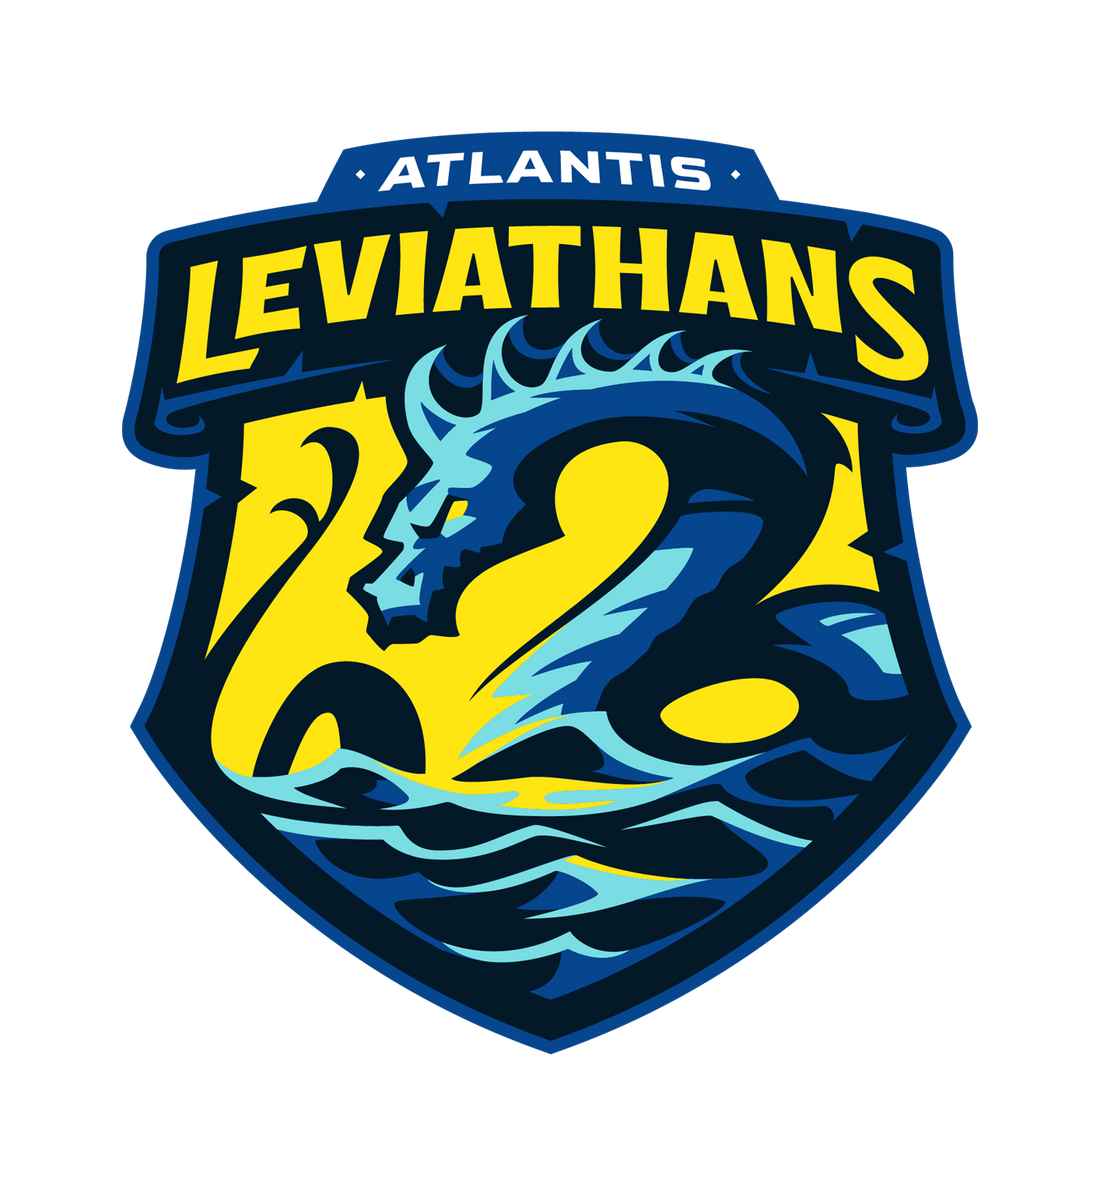 Atlantis Leviathans